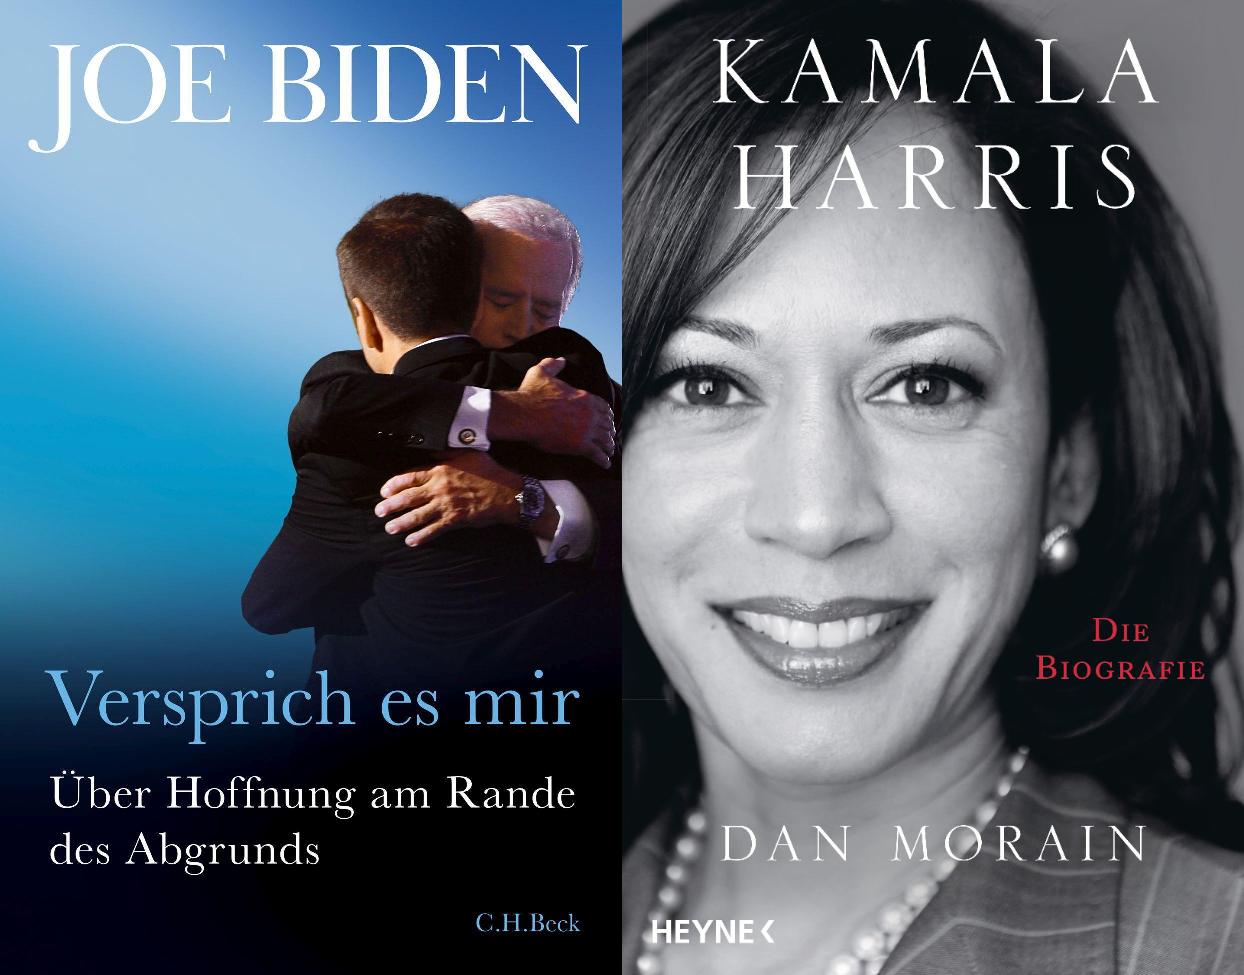 Joe Biden: Verprich es mir + Kamala Harris: Die Biografie + 1 exklusives Postkartenset